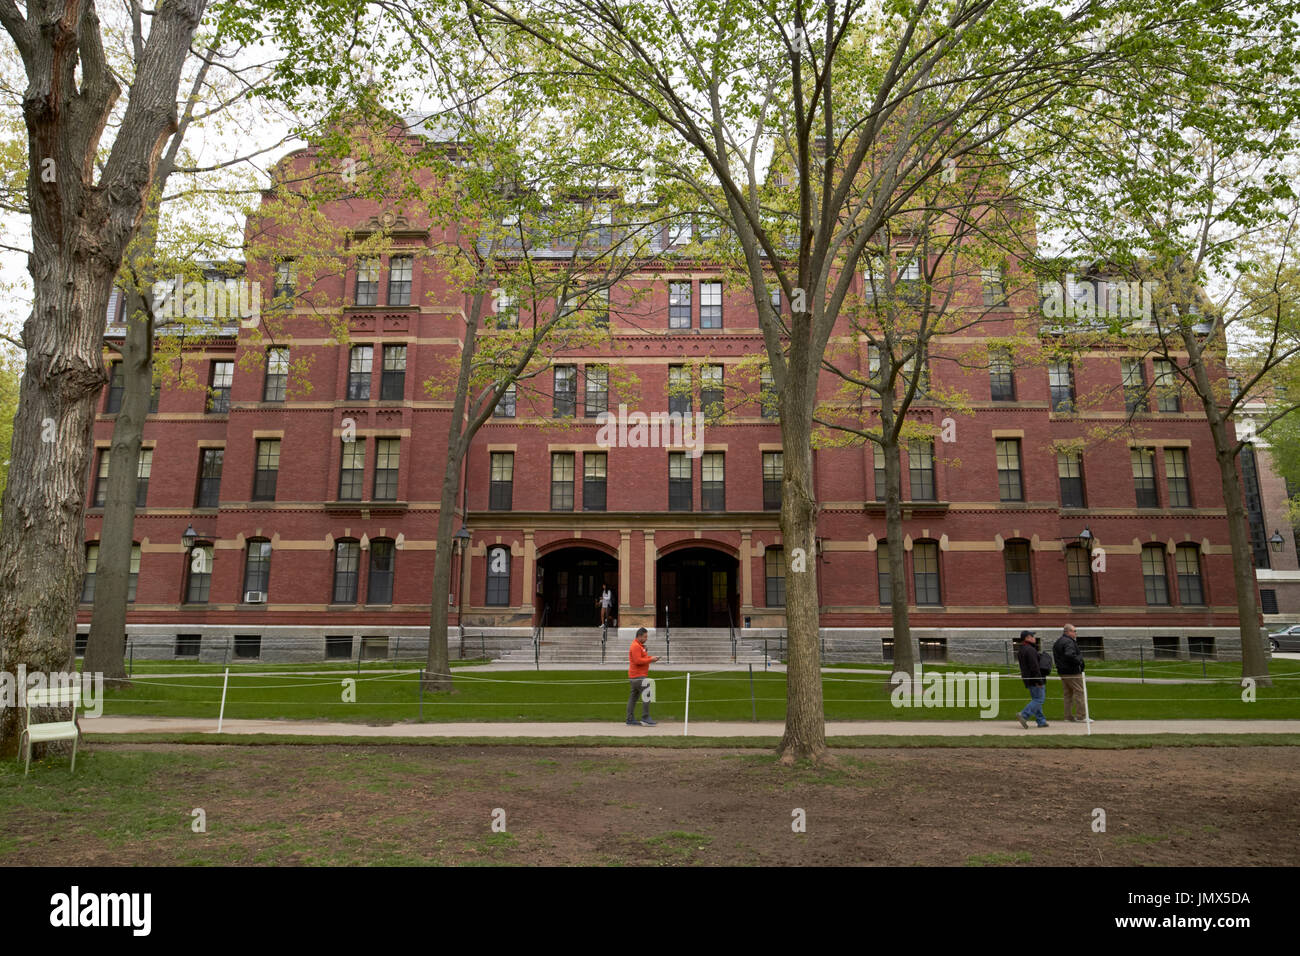 weld hall harvard university Boston USA Stock Photo